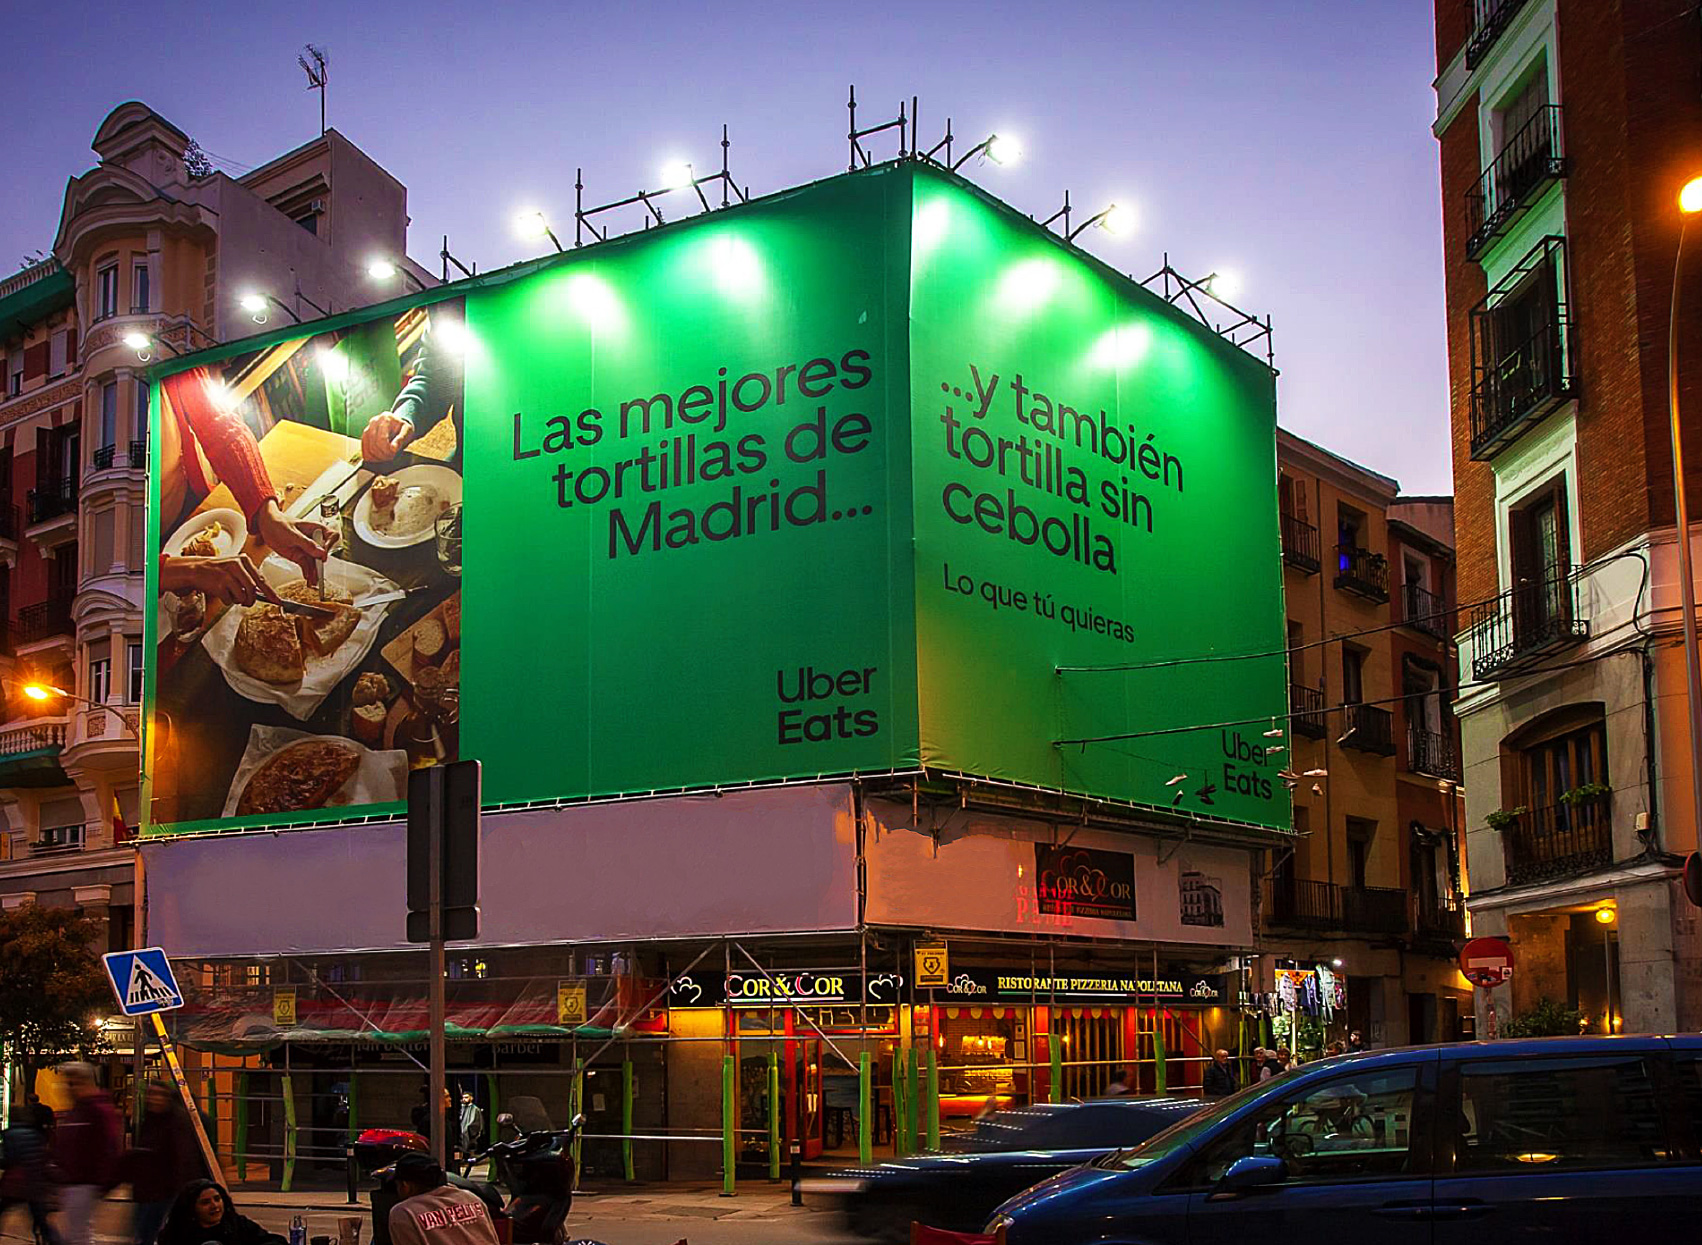 Uber Eats - Spain campaign